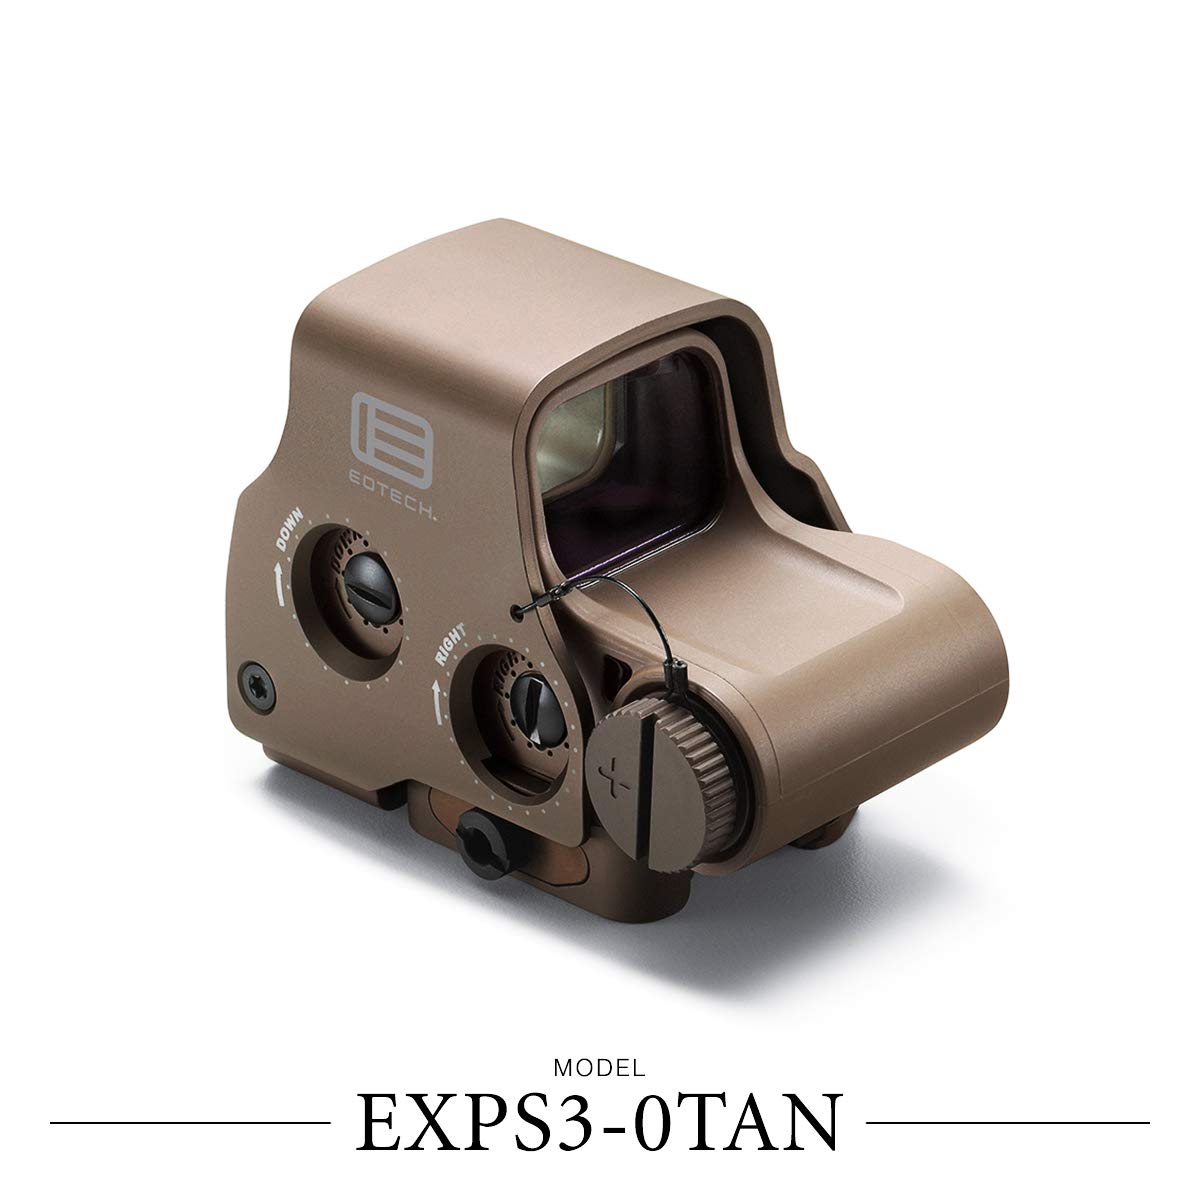 EOTECH Holographic Weapon Sight TAN 68MOA Ring & 1 MOA Dot  - EXPS3-0TAN